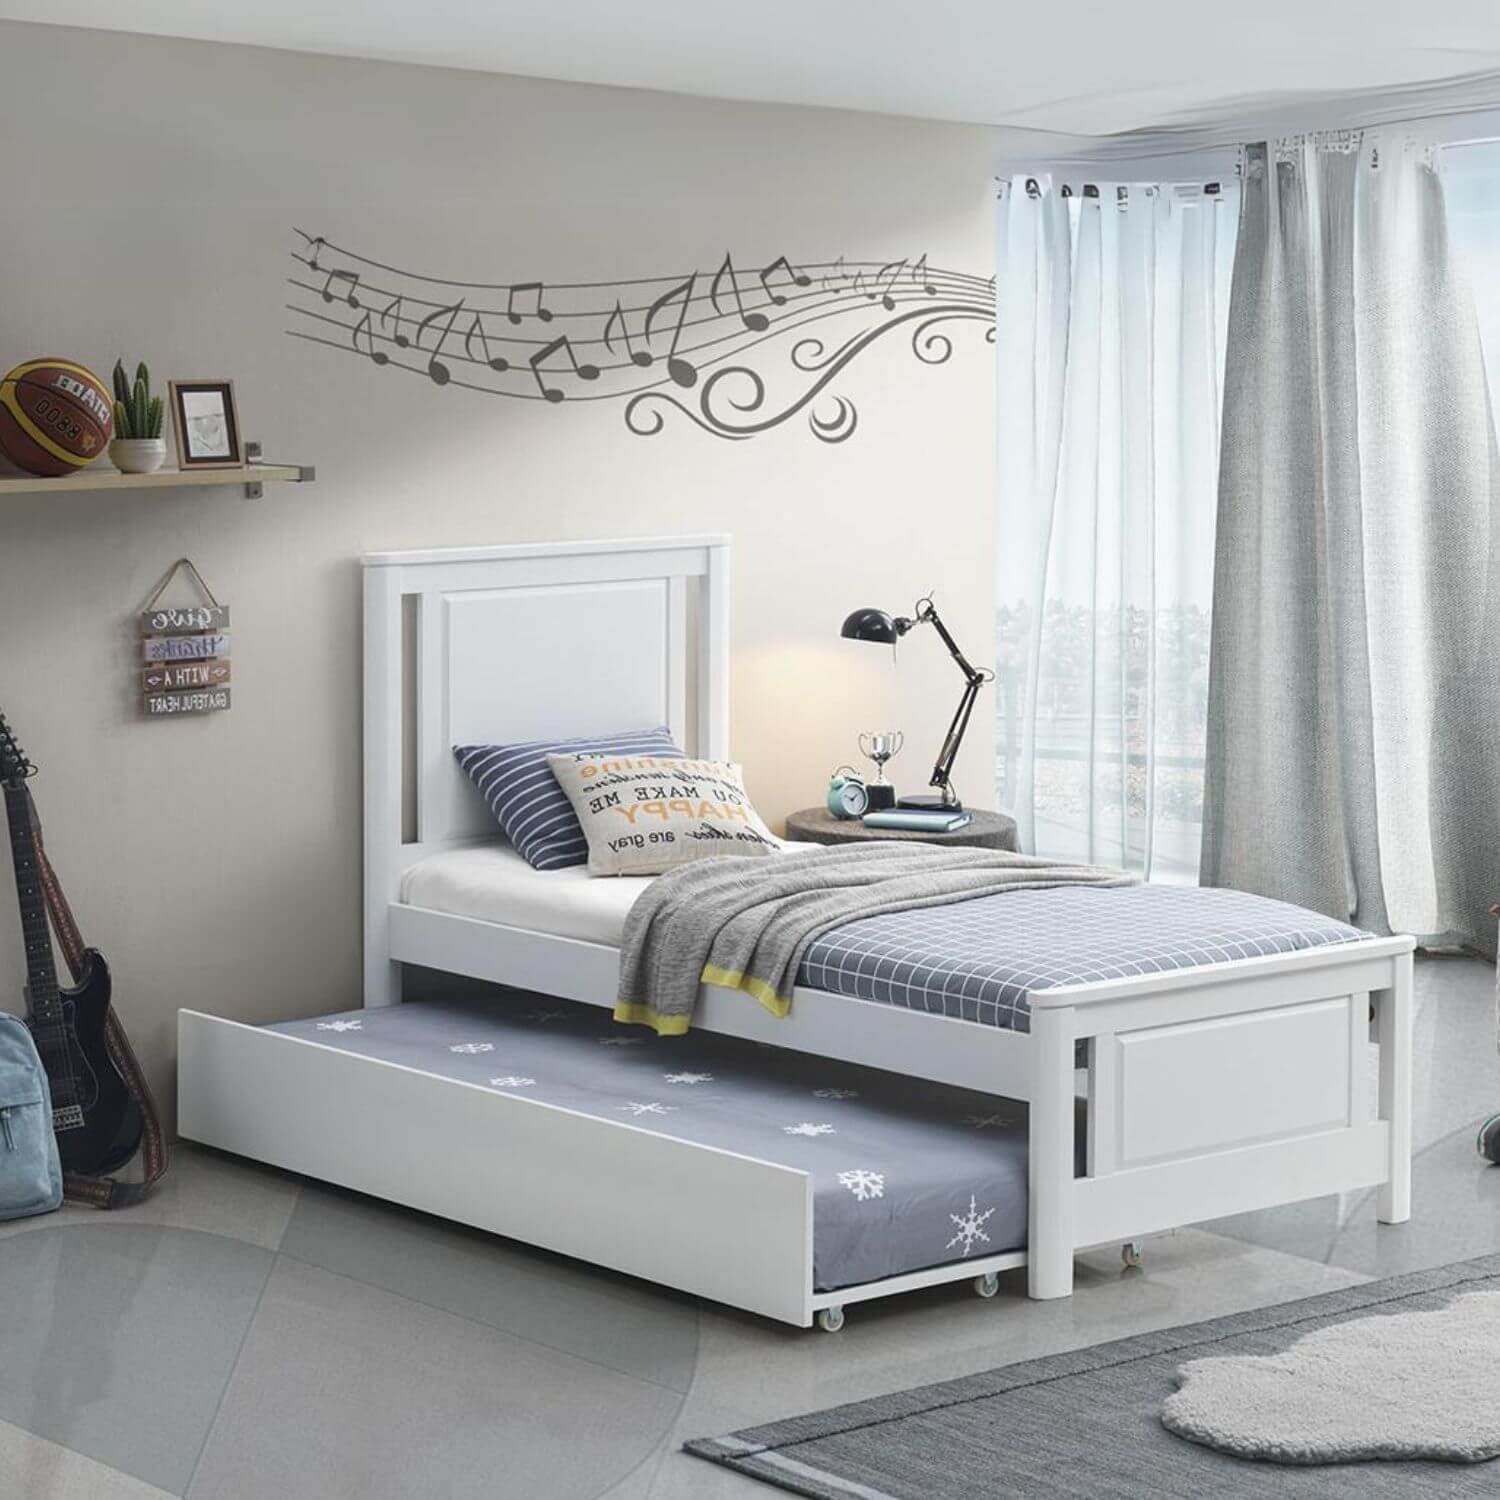 Orbelle Teen Bed Model 301 White - Lifestyle